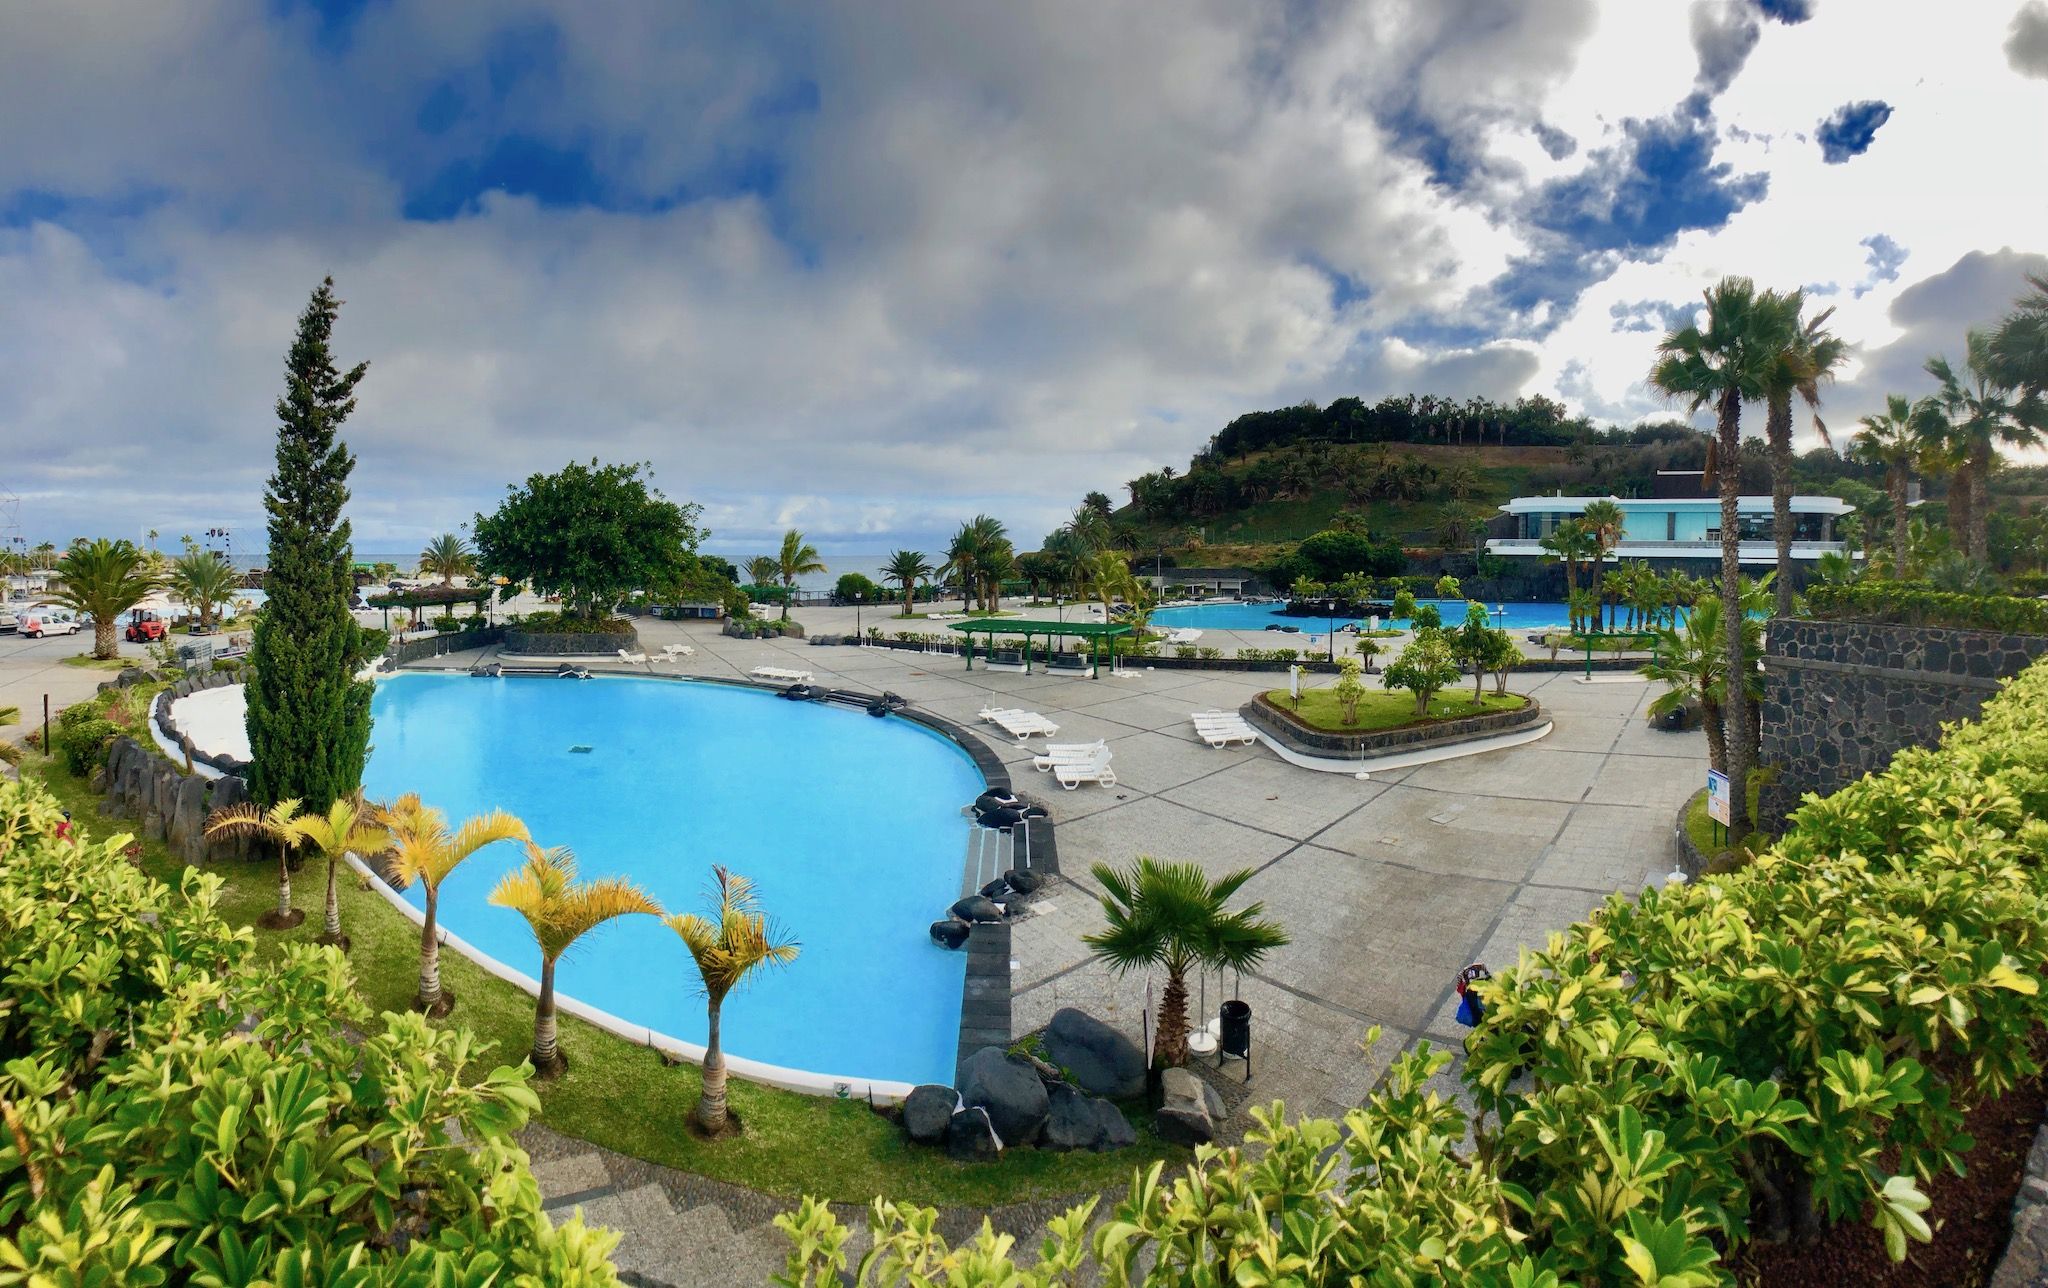 Parque Marítimo César Manrique: the swimming pool at the port of Santa Cruz de Tenerife was designed by the Canarian exceptional artist. Photo: Sascha Tegtmeyer